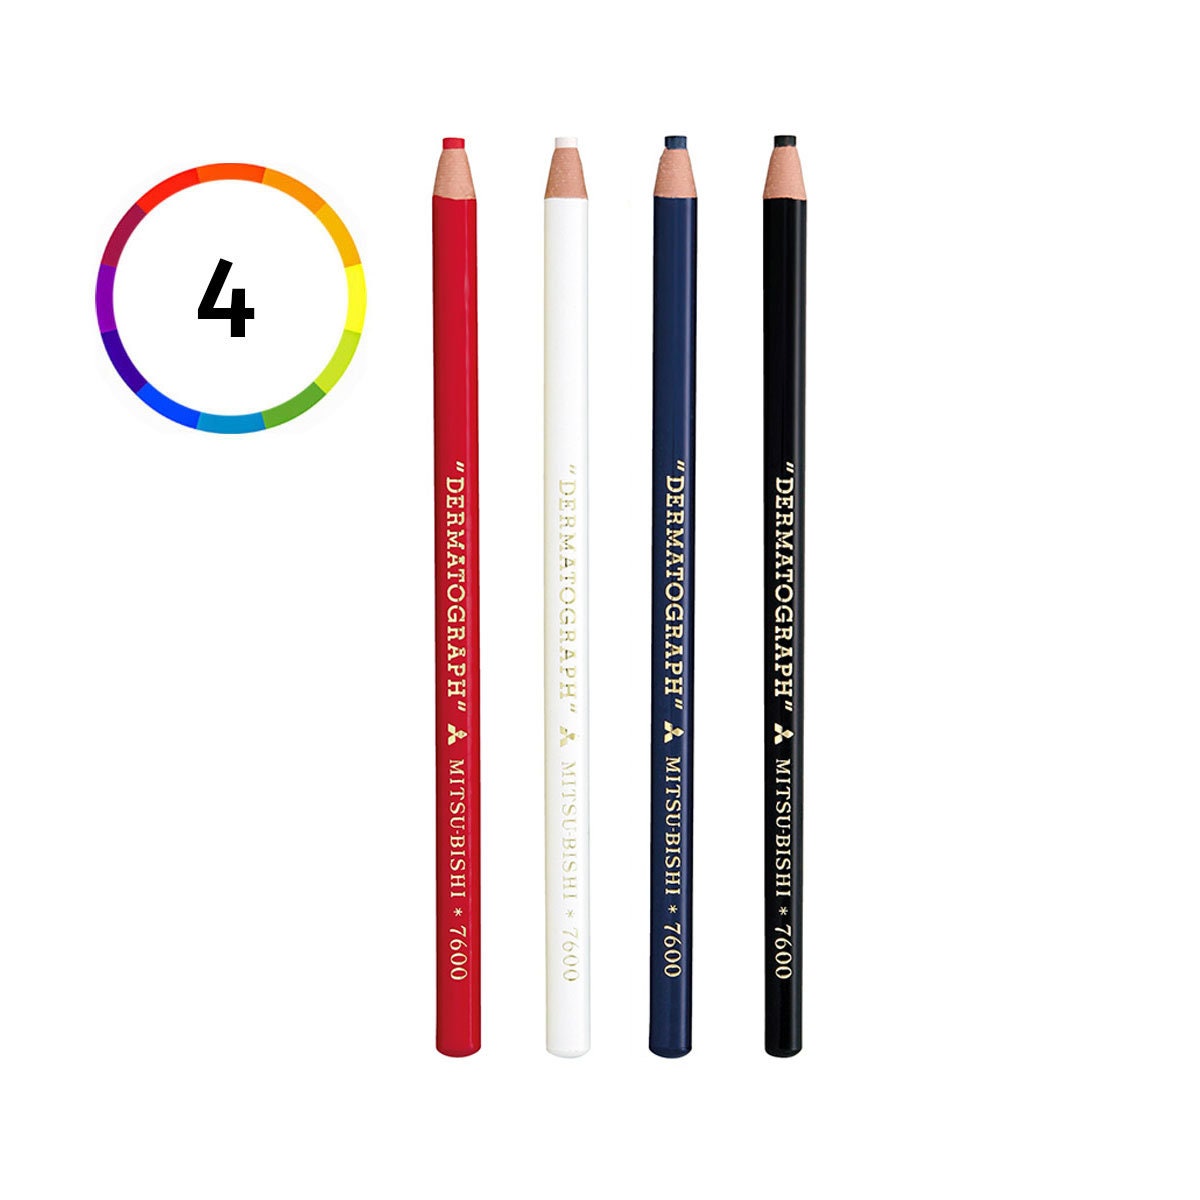 Thorntons Art Supply Premium 150 Artist Pencil Set- Colored